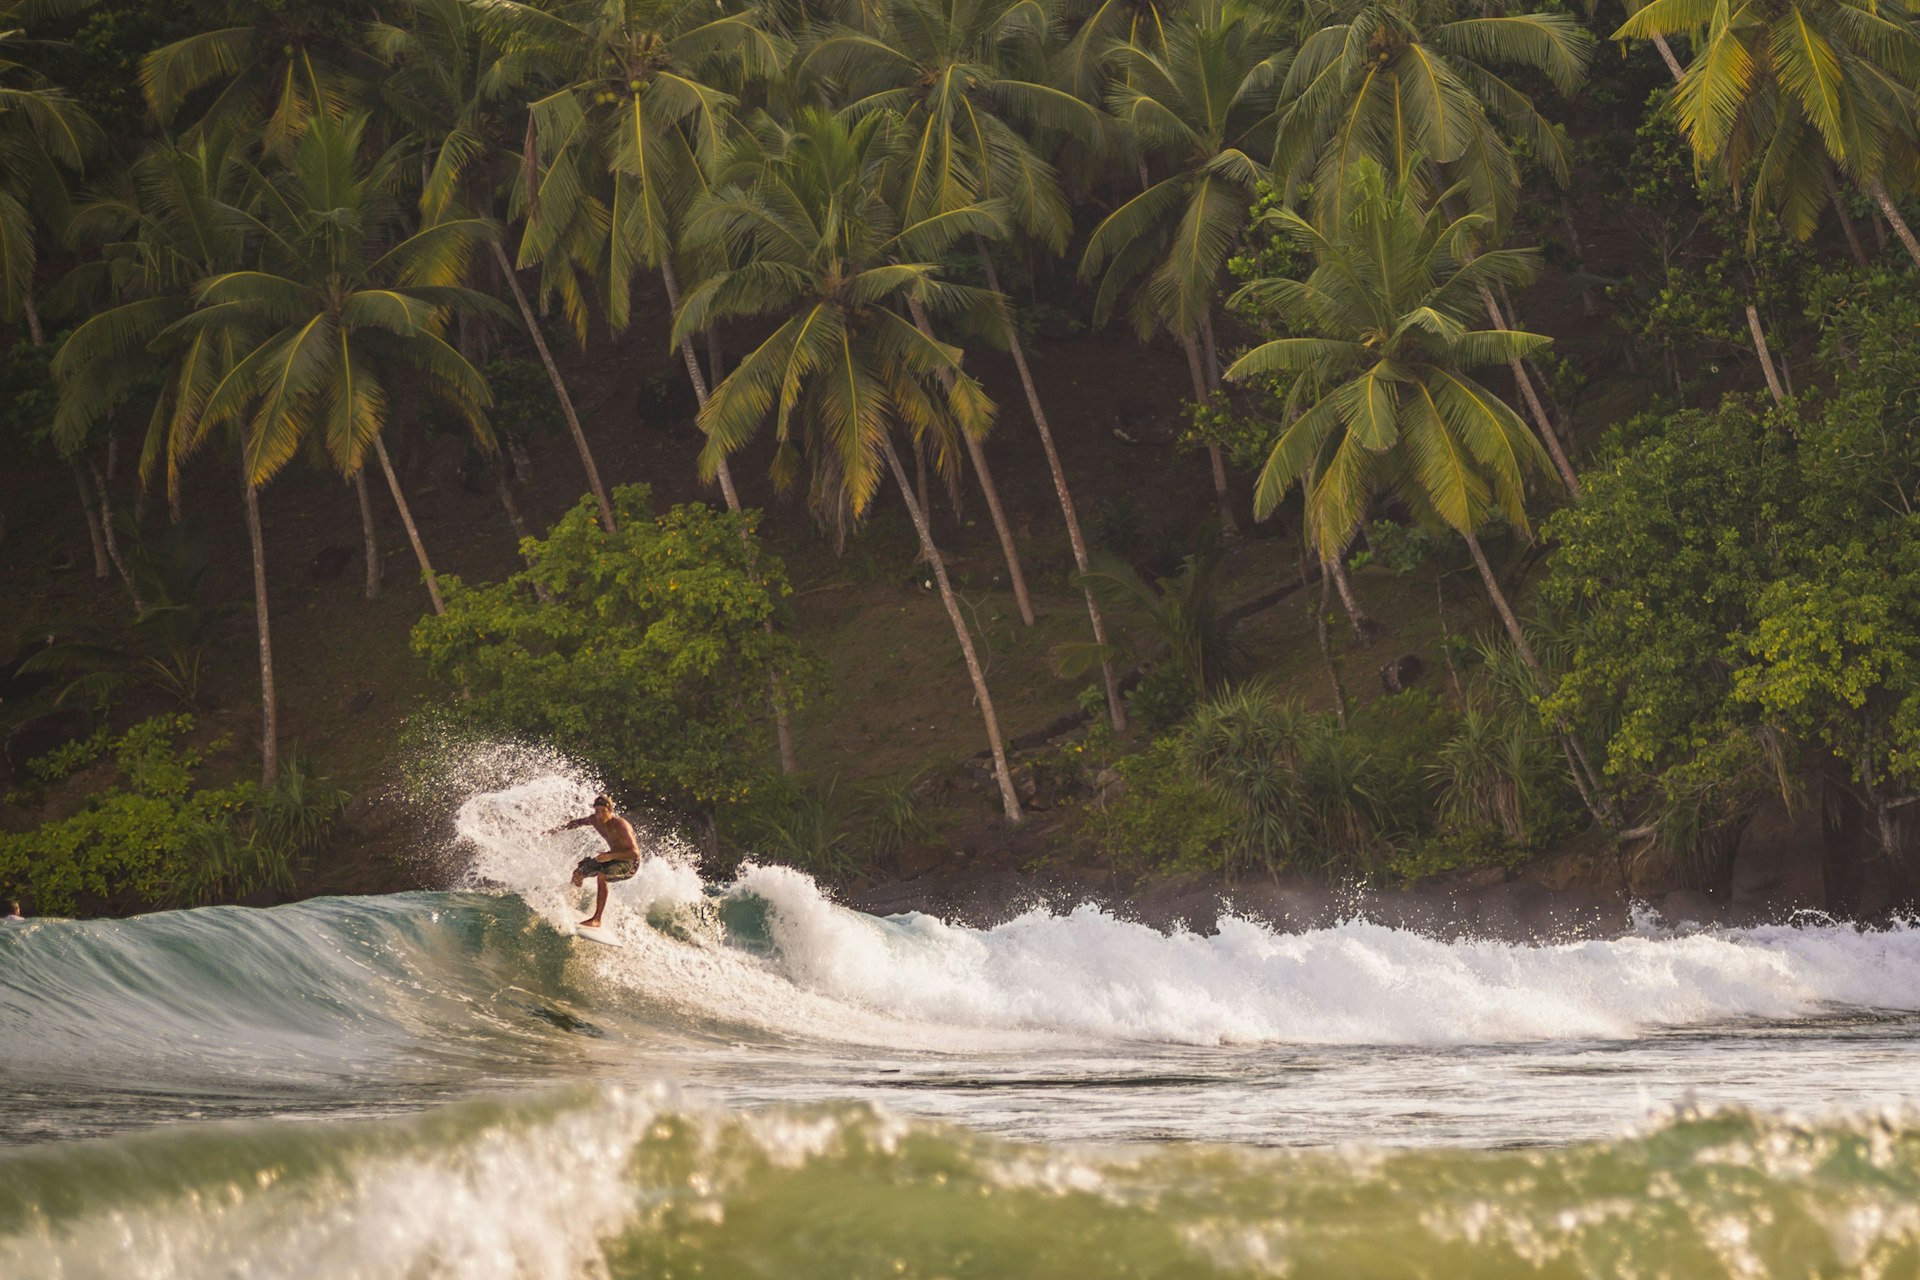 Mirissa Beach, surfer surfing at sunset, South Coast of Sri Lanka, Southern Province, Asia